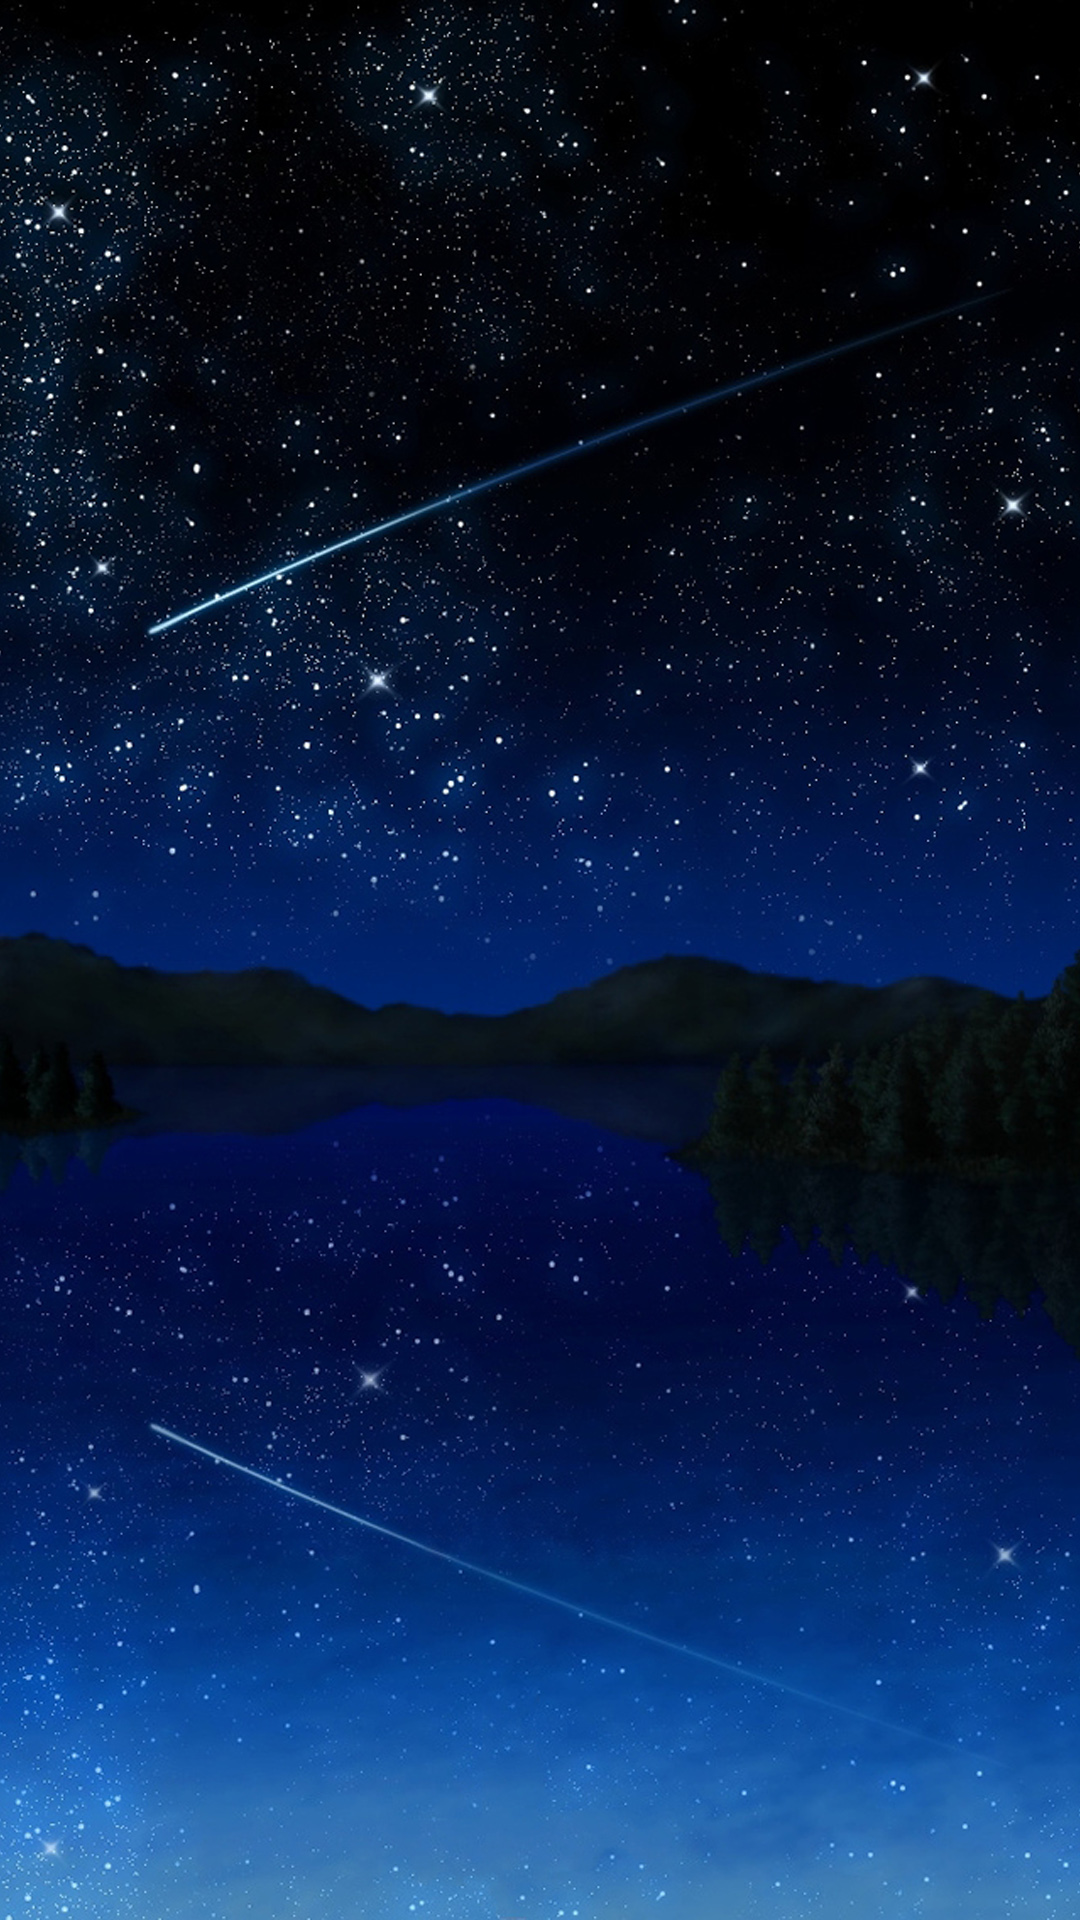 Shooting Star Sky Wallpaper For Galaxy S5